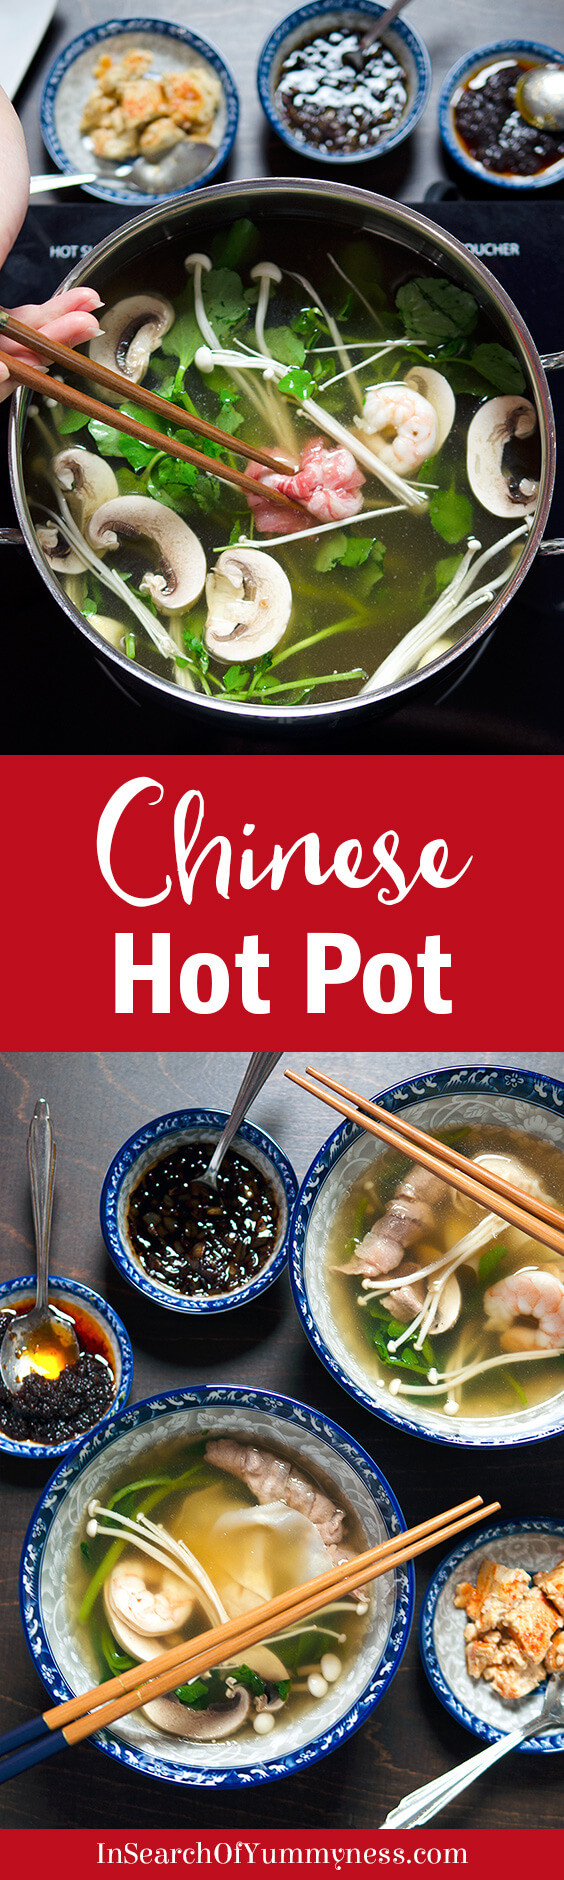 Chinese Hot Pot Recipes
 How to Make Chinese Hot Pot at Home